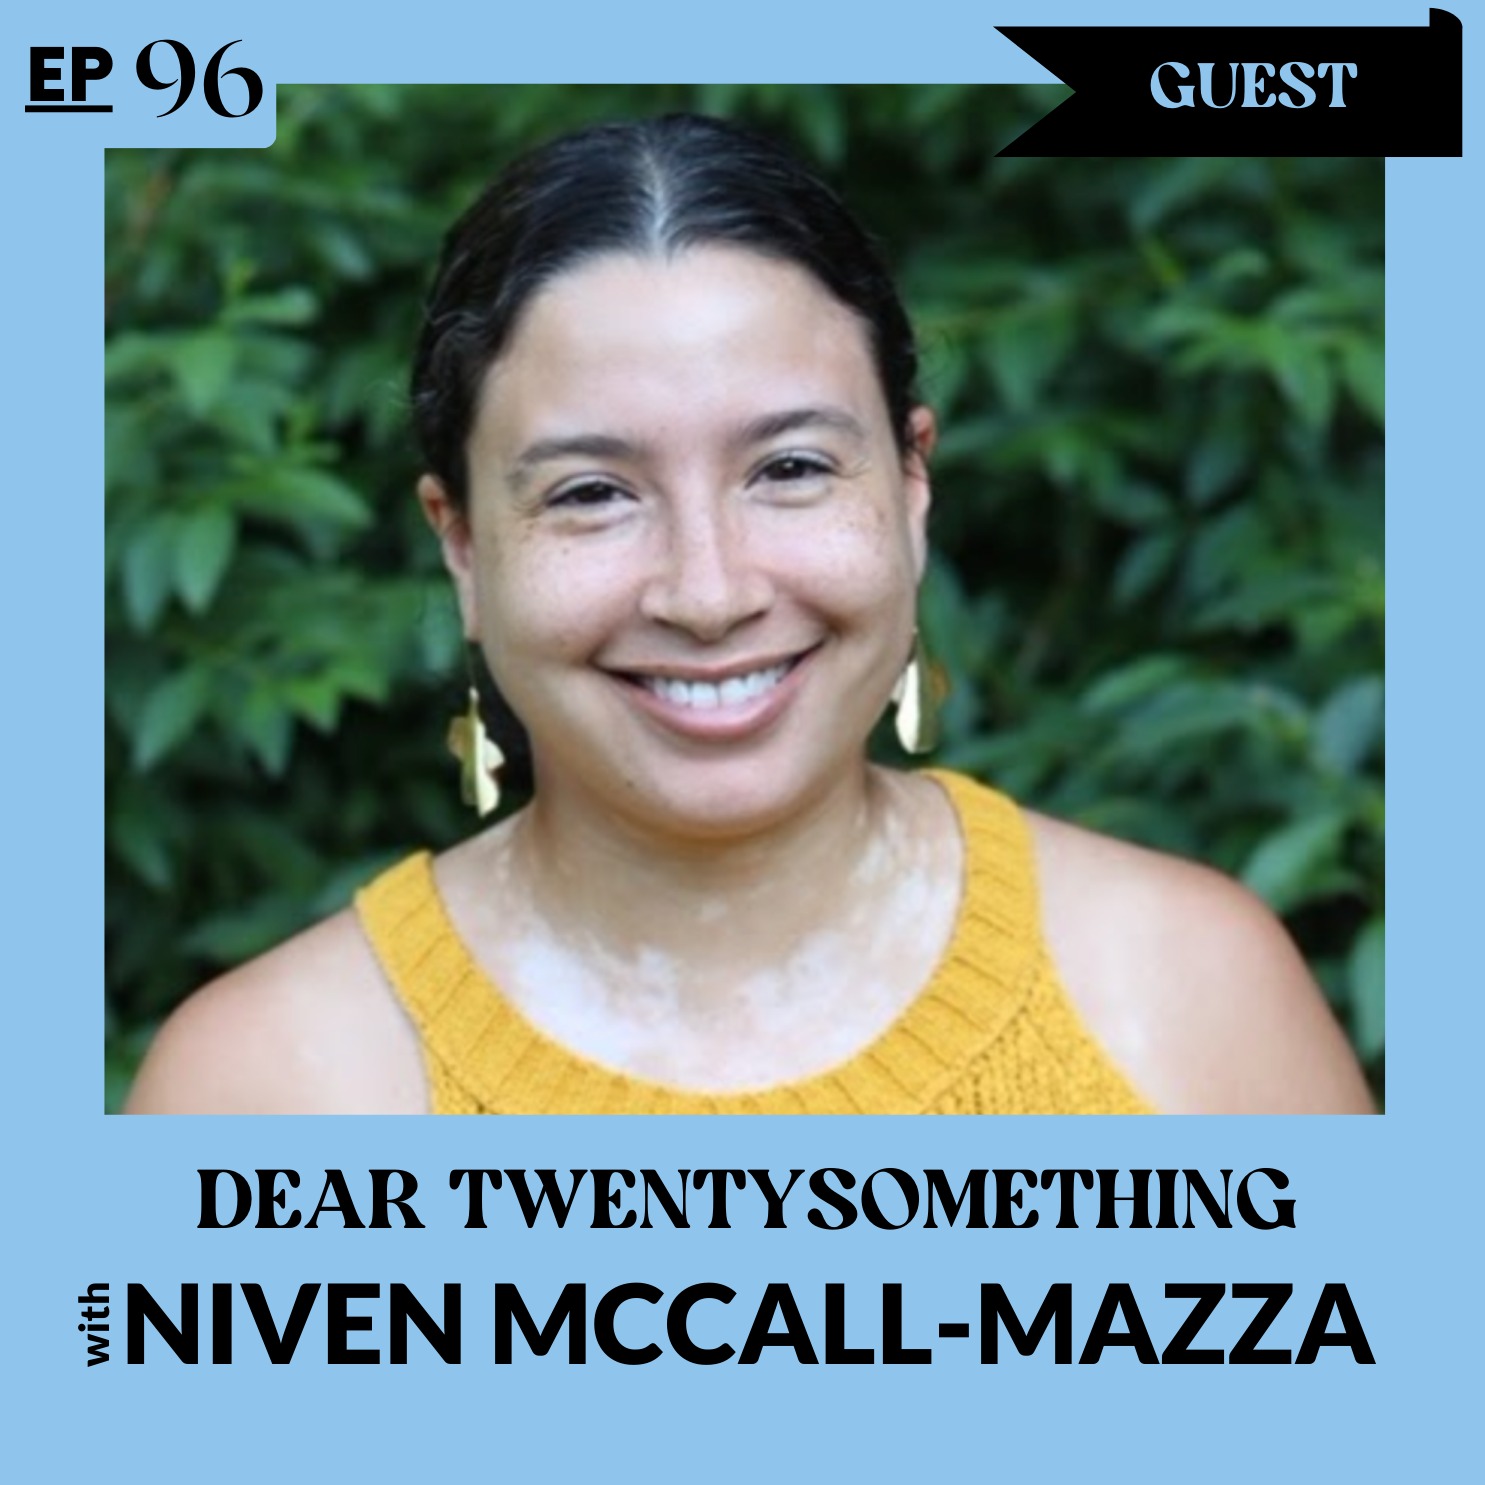 Niven McCall-Mazza: Editor-in-Chief of theSkimm